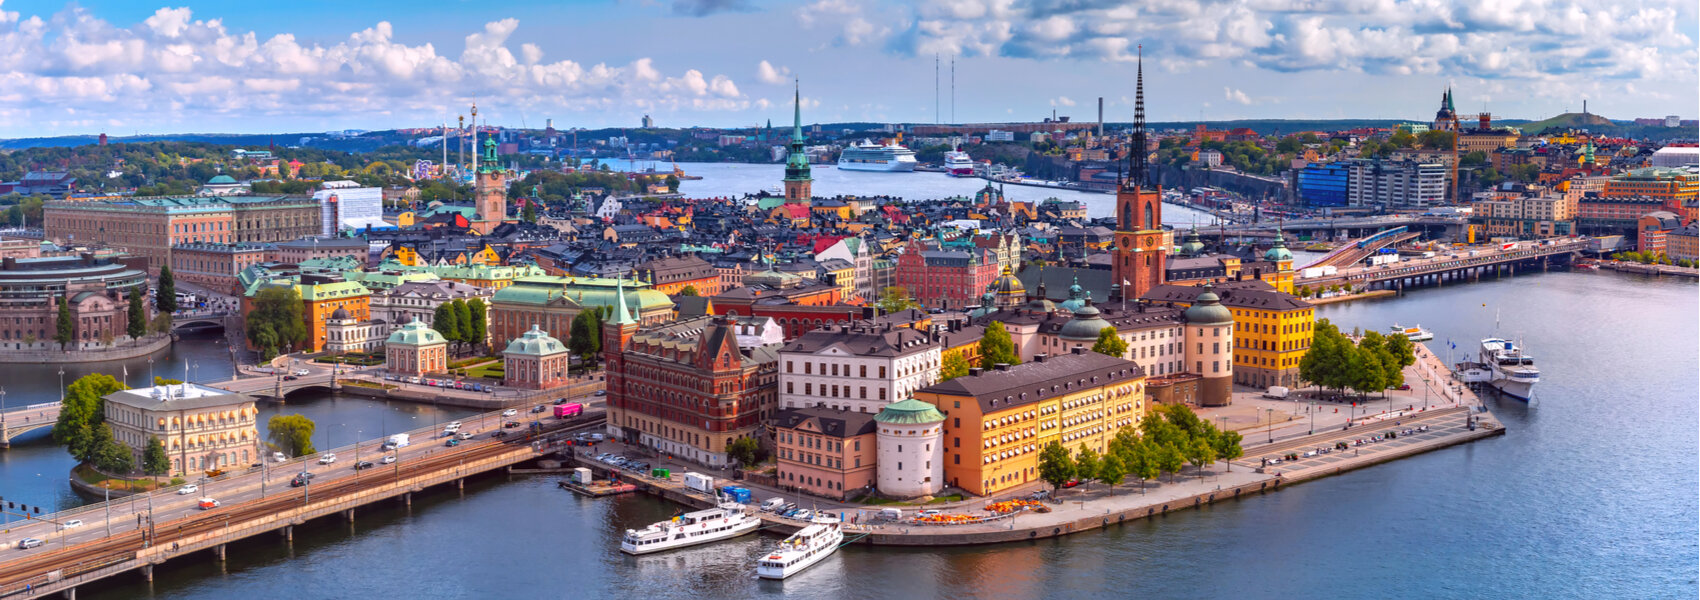 Panorama sur Stockholm